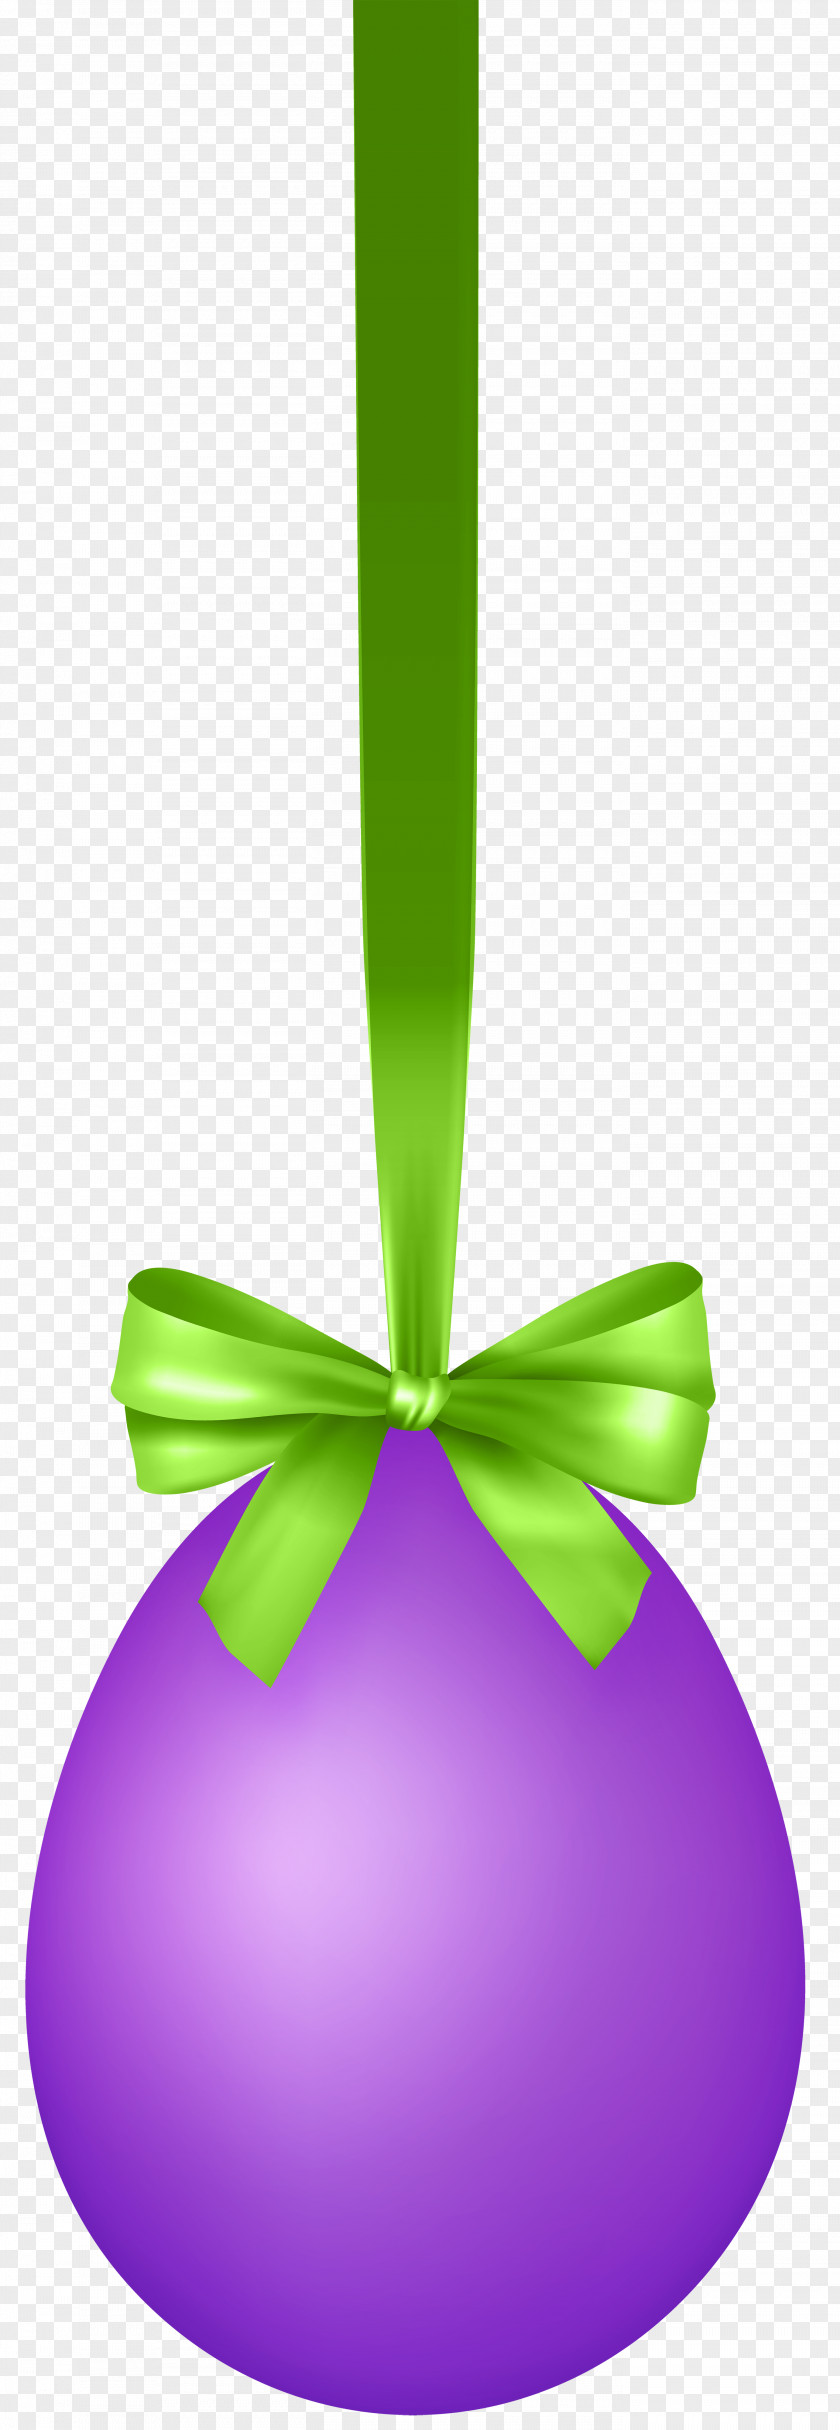 Purple Hanging Easter Egg With Bow Transparent Clip Art Image Leaf Green PNG